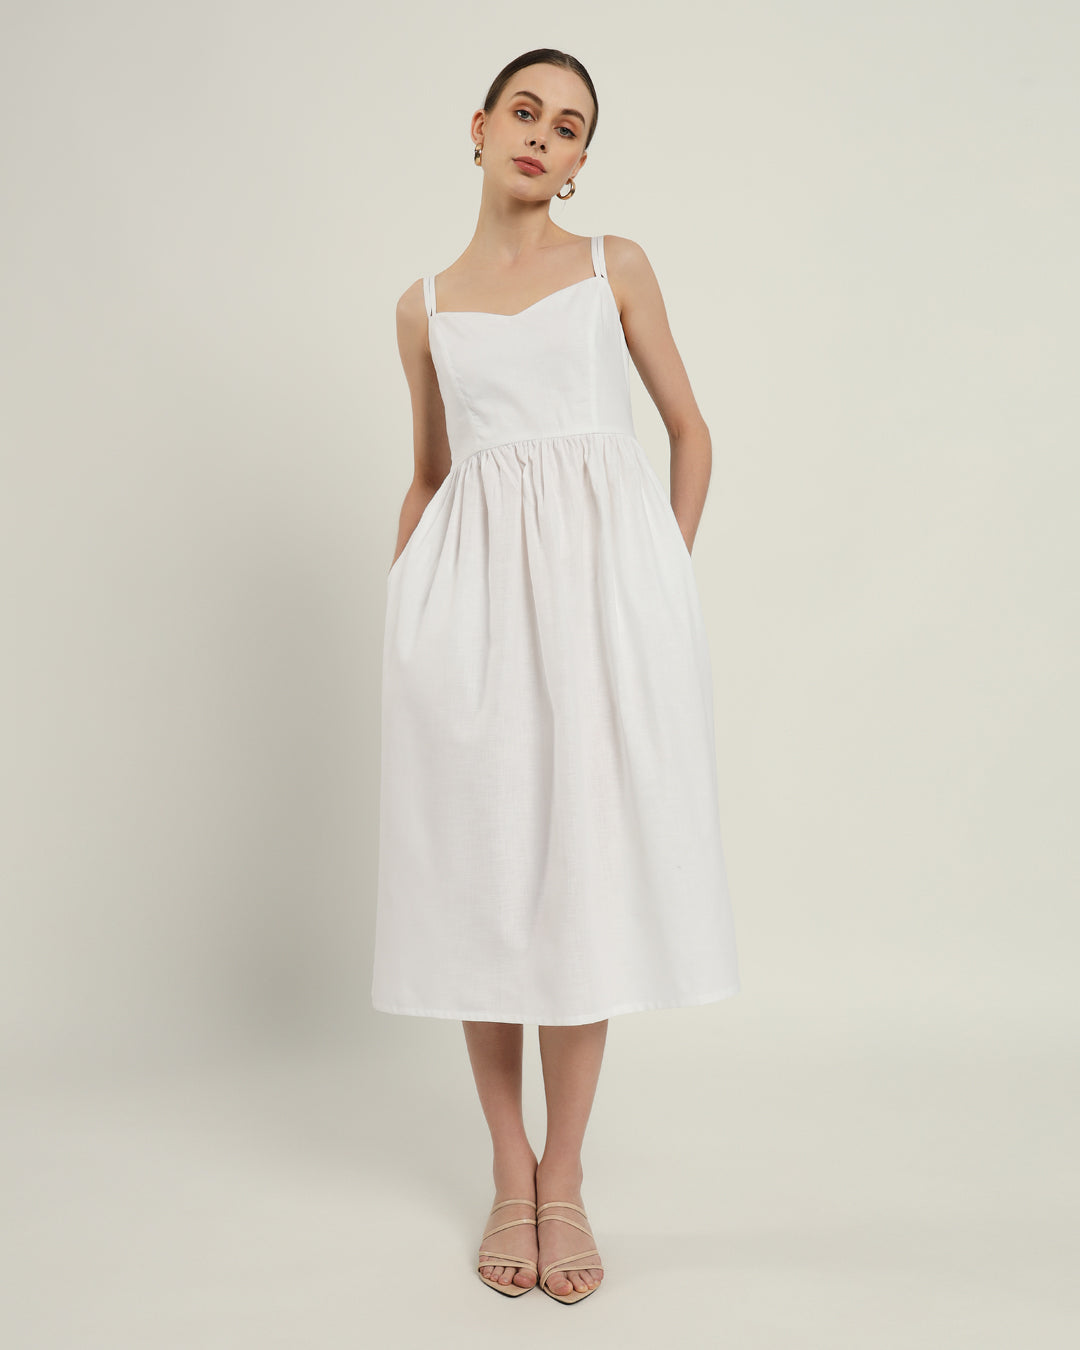 The Haiti Daisy White Linen Dress